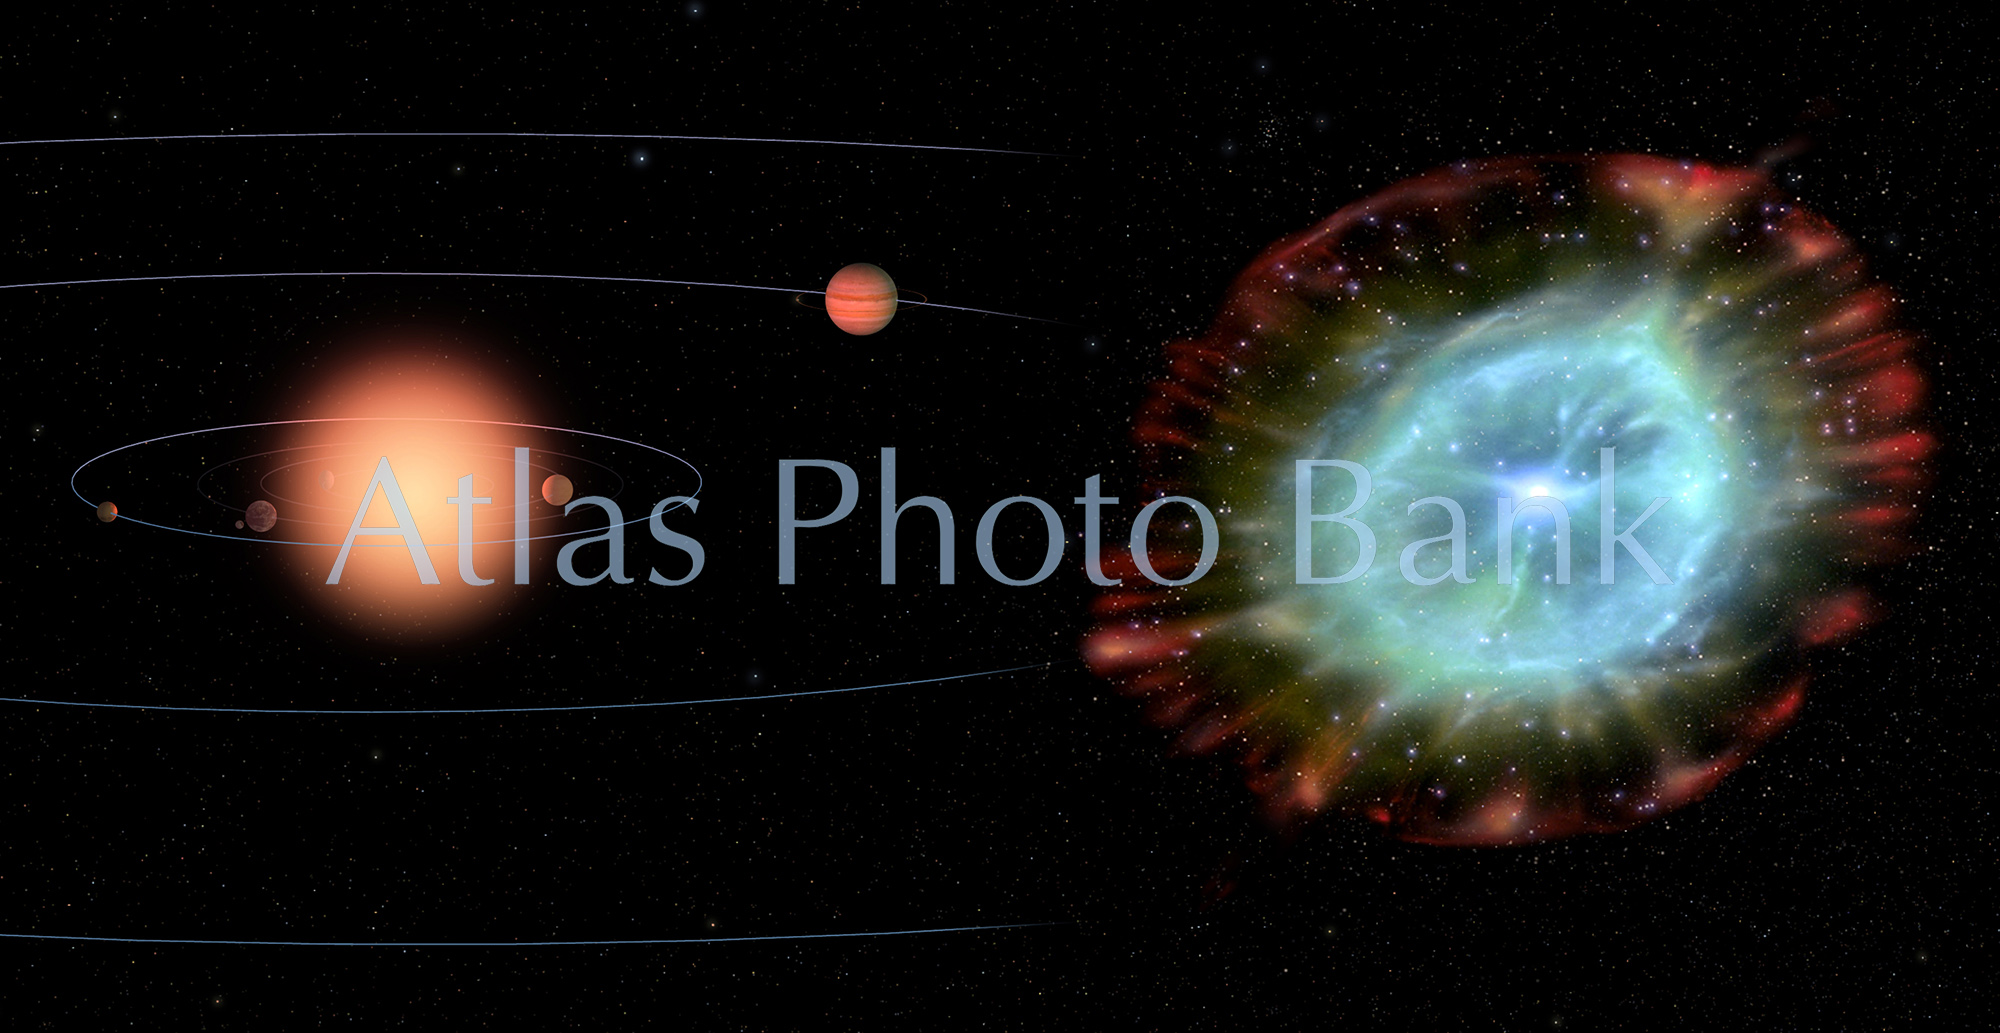 SS-217-未来の太陽-赤色巨星から惑星状星雲形成-太陽の最後2種混合